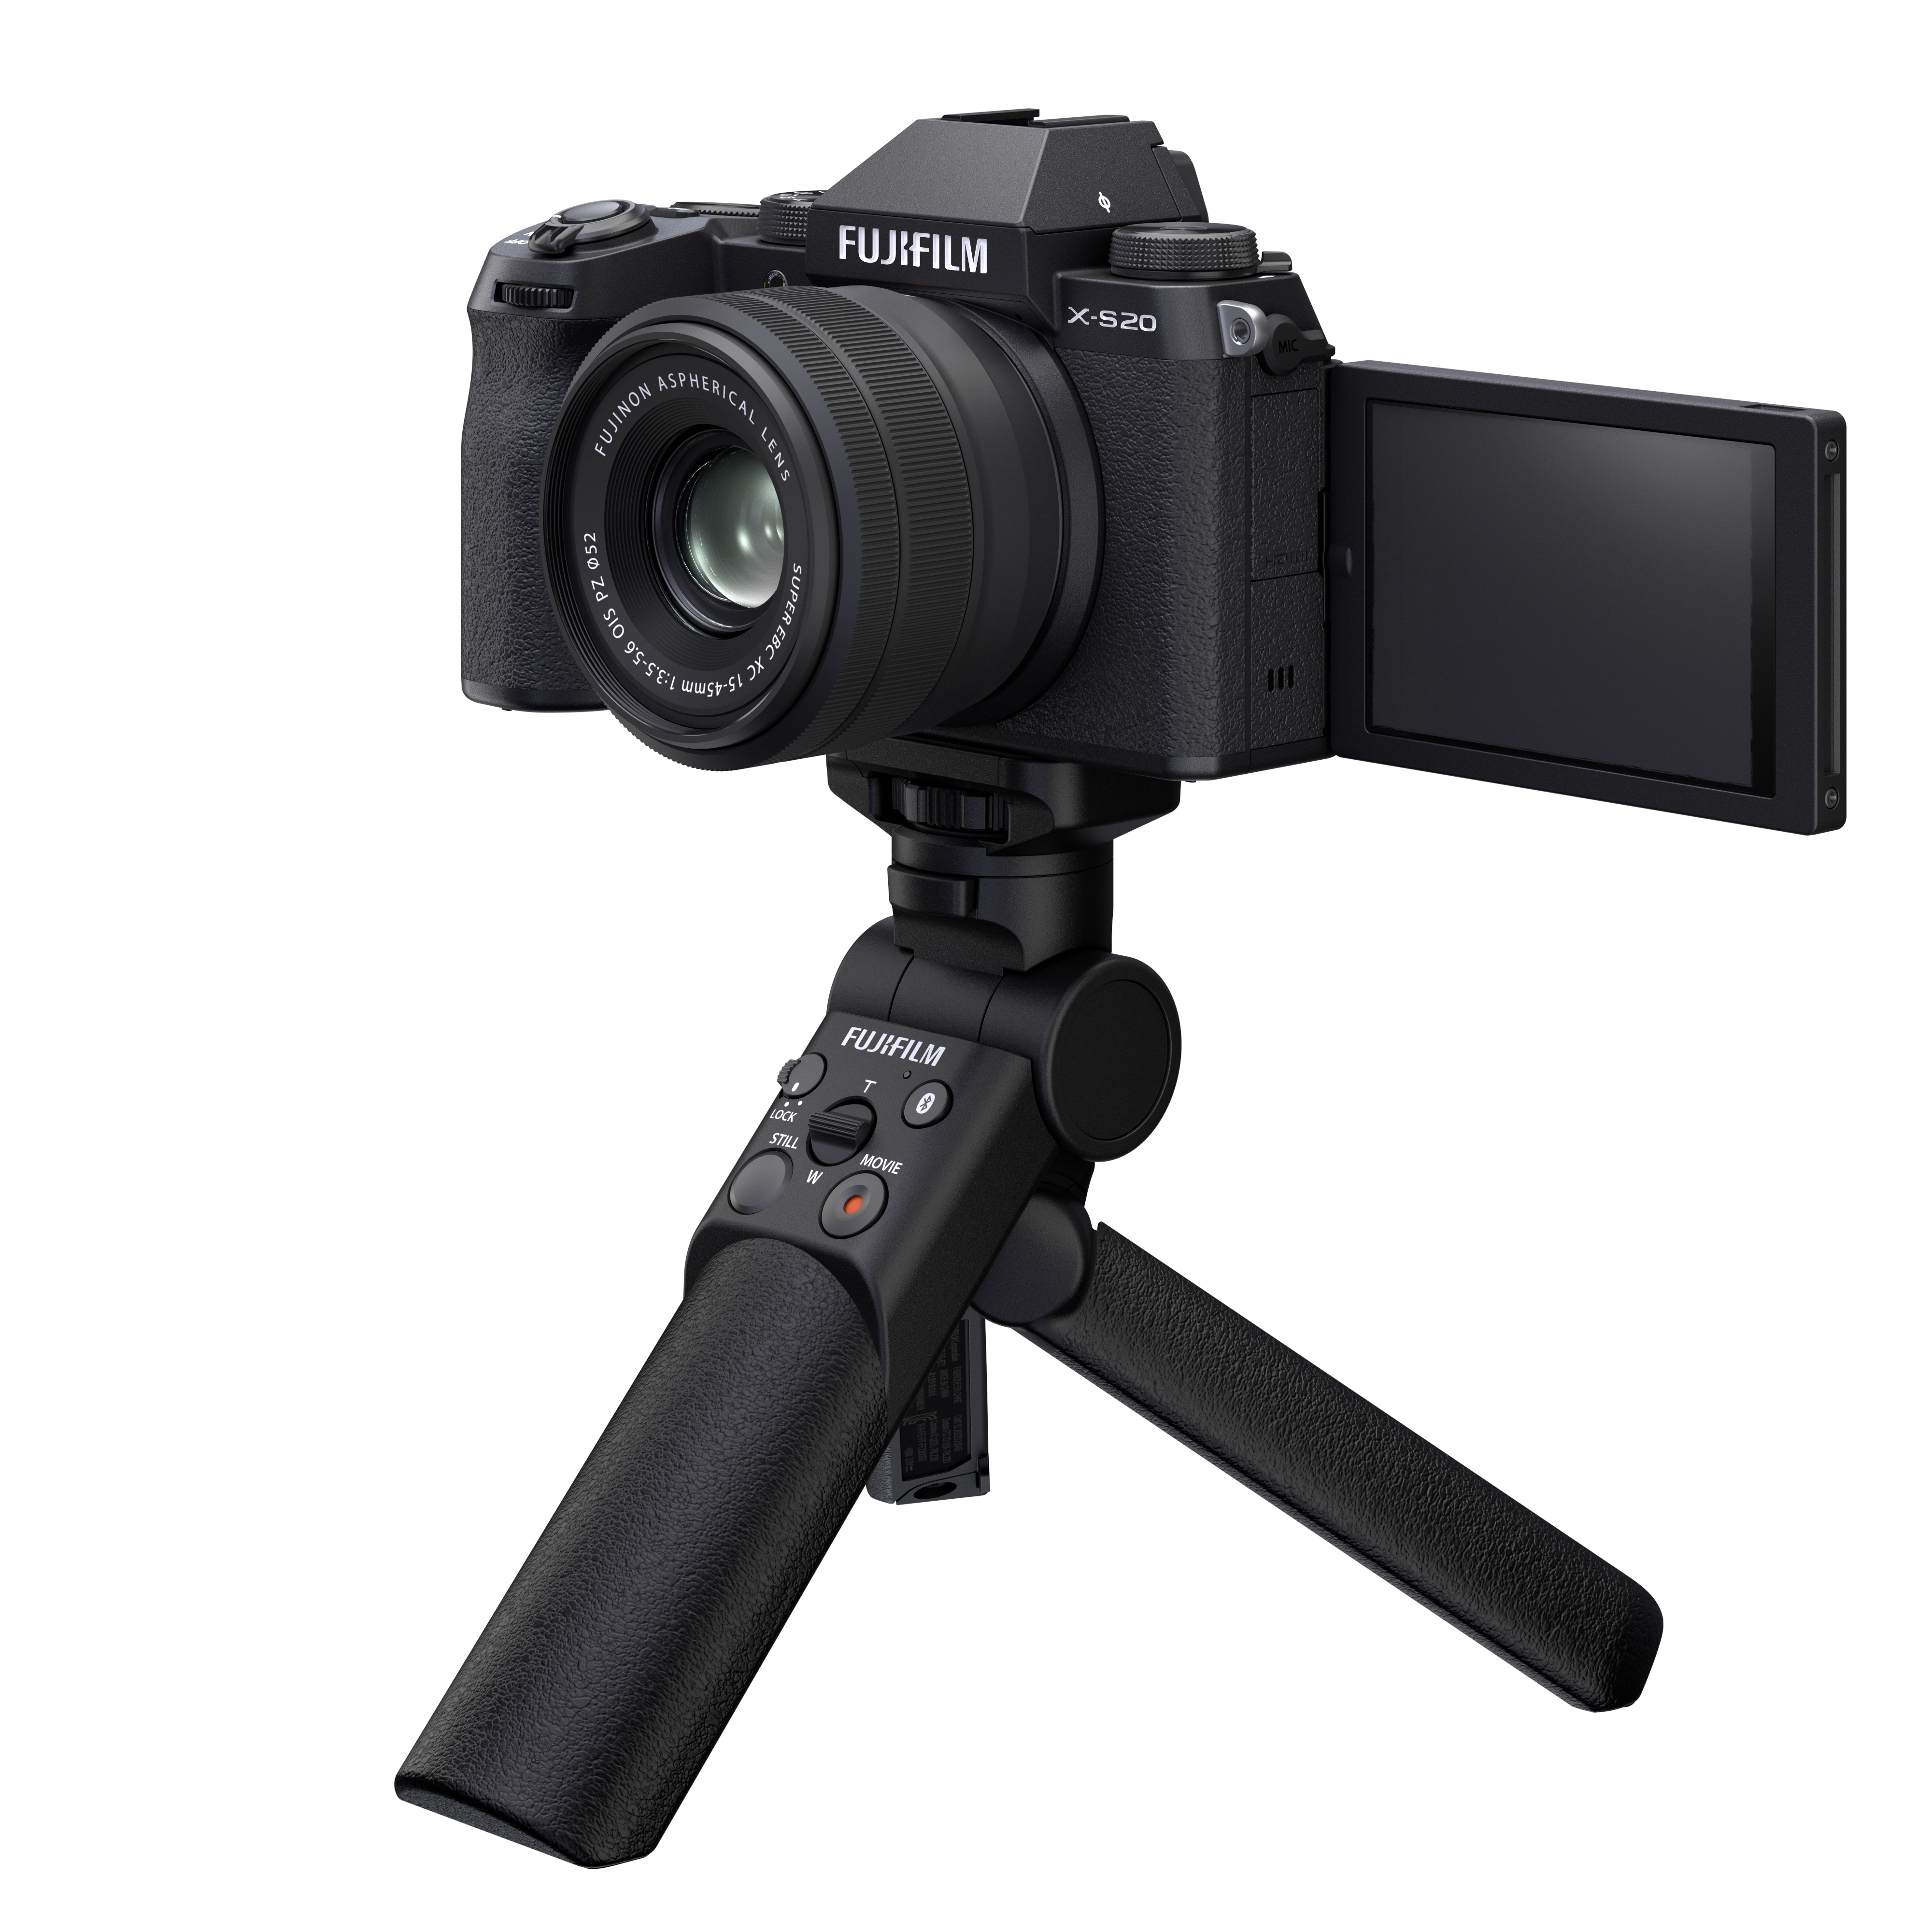 Fujifilm X-S20: Meet Your New Entry-Level Fujifilm Hybrid Camera